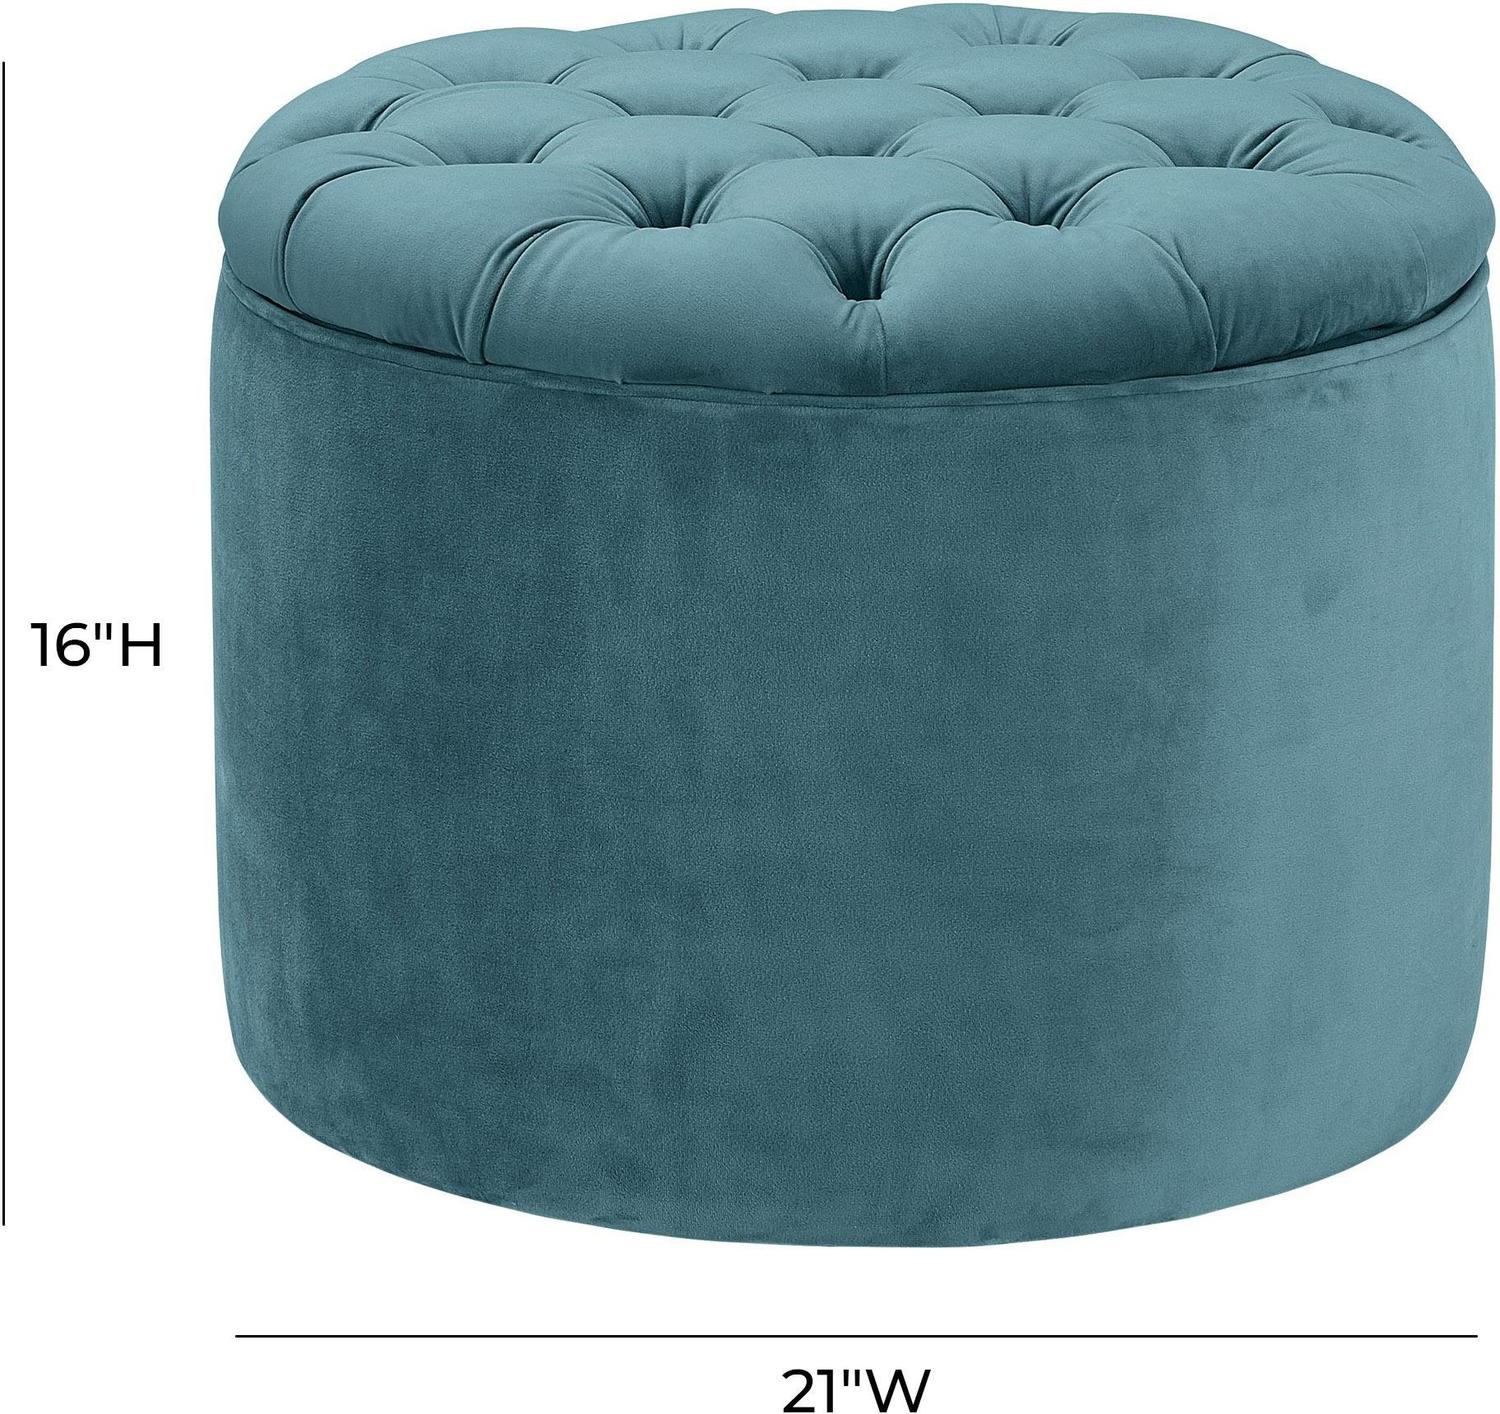 upholstered ottoman storage bench Tov Furniture Ottomans Sea Blue